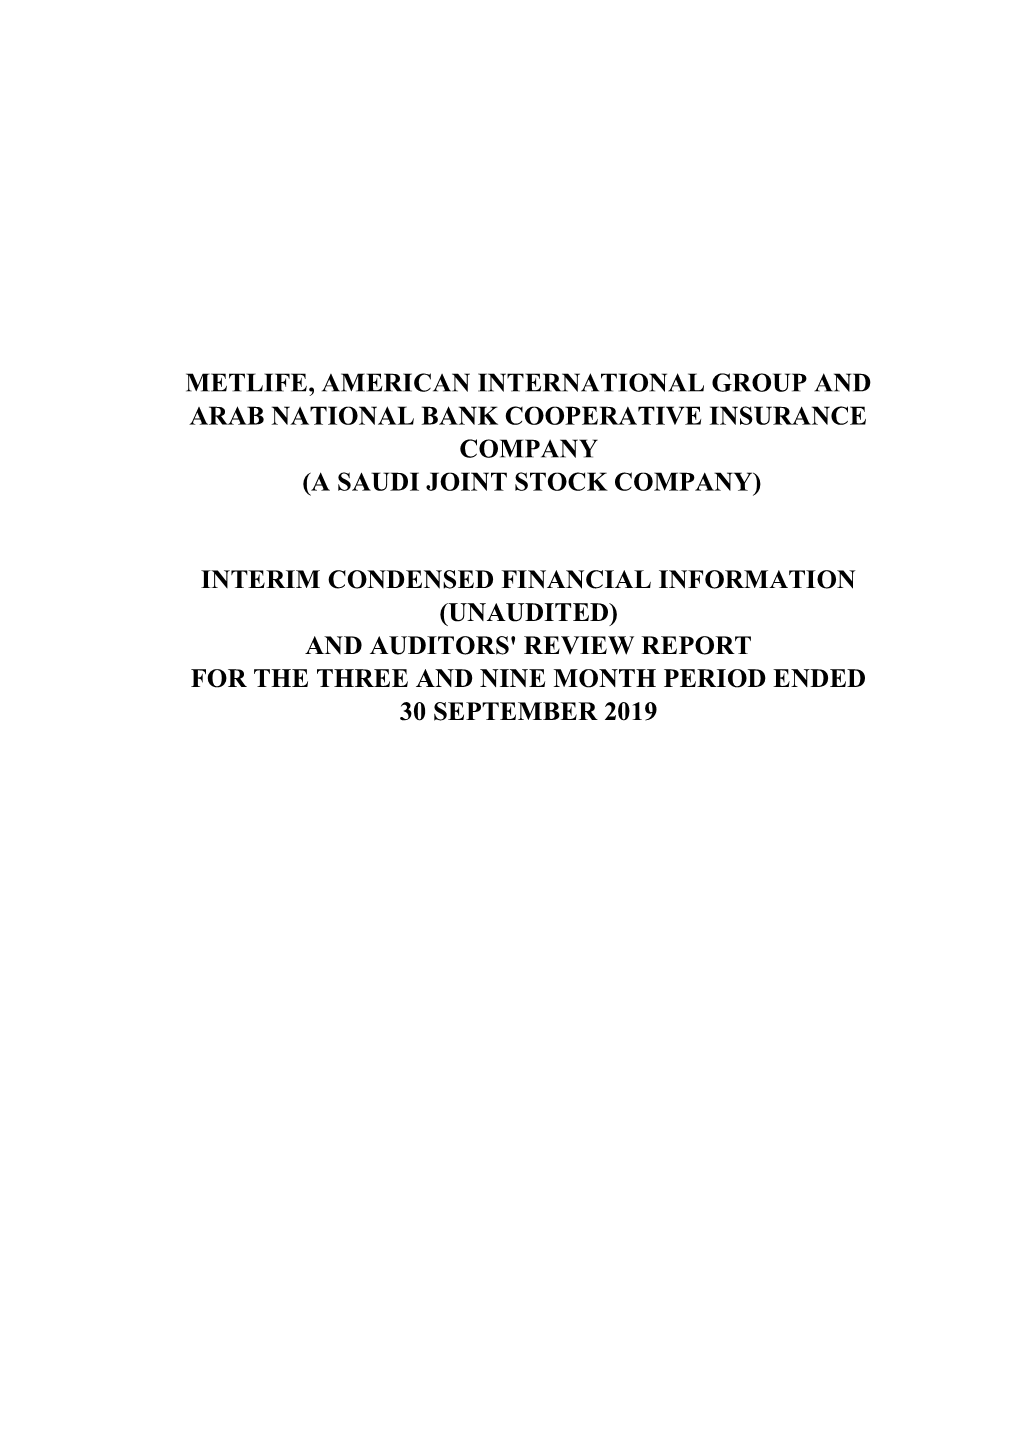 Metlife, American International Group and Arab National Bank Cooperative Insurance Company (A Saudi Joint Stock Company)